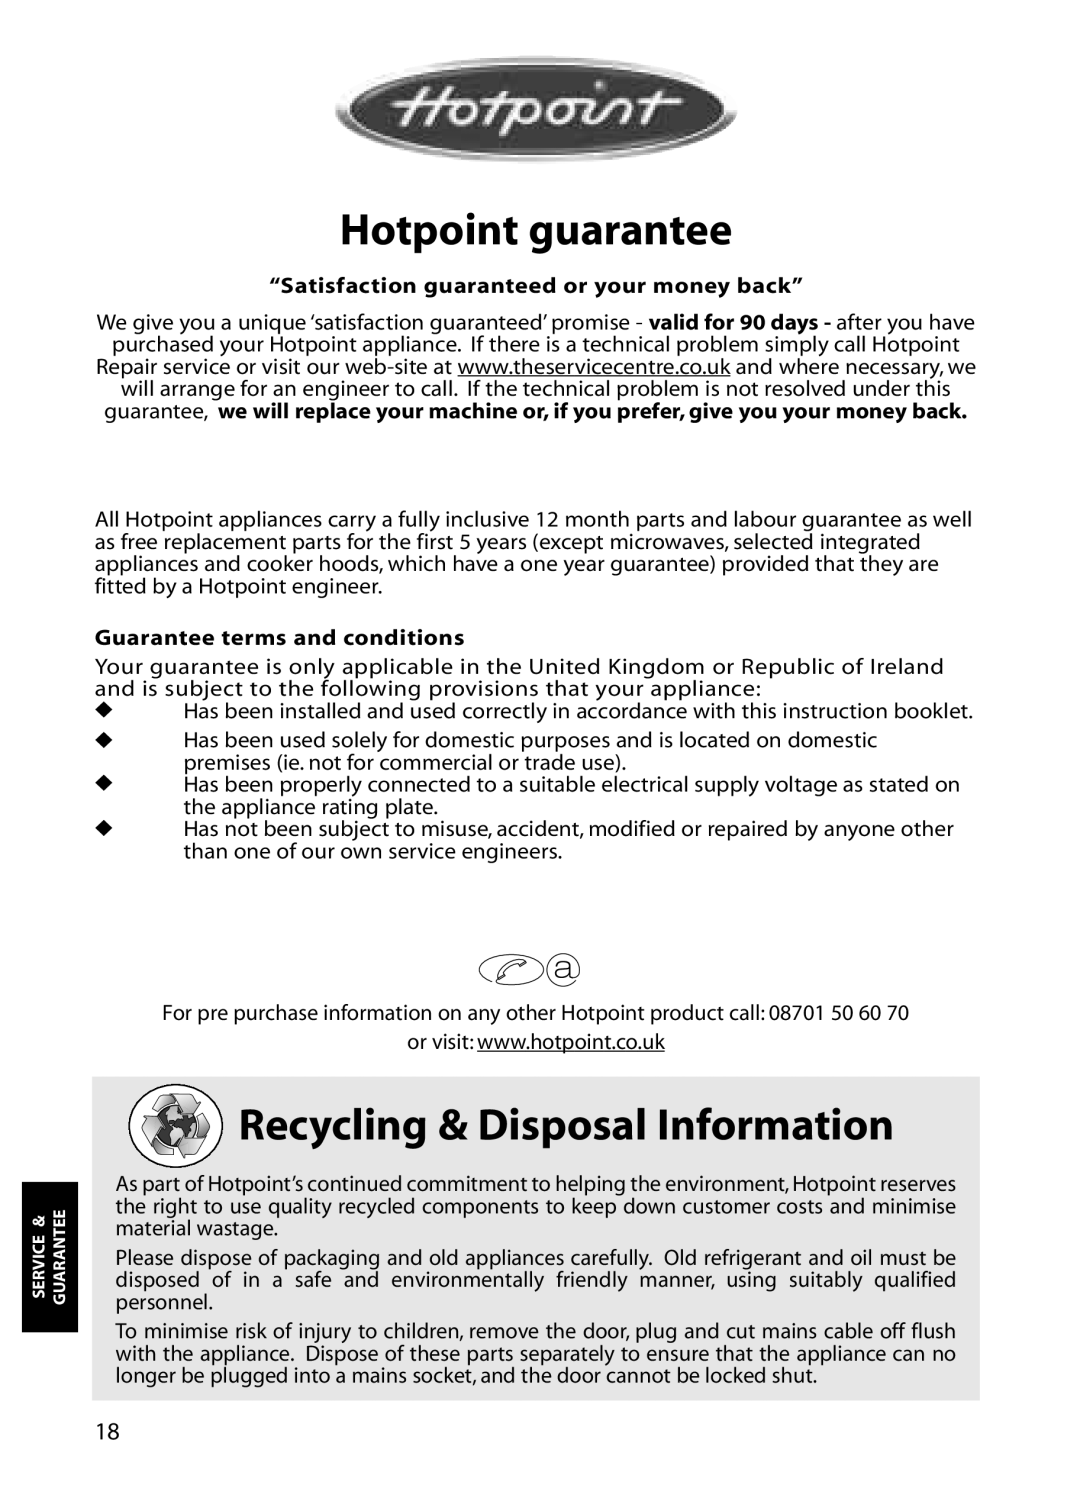 Hotpoint FZA80, FZA50 manual Hotpoint guarantee, Recycling & Disposal Information 